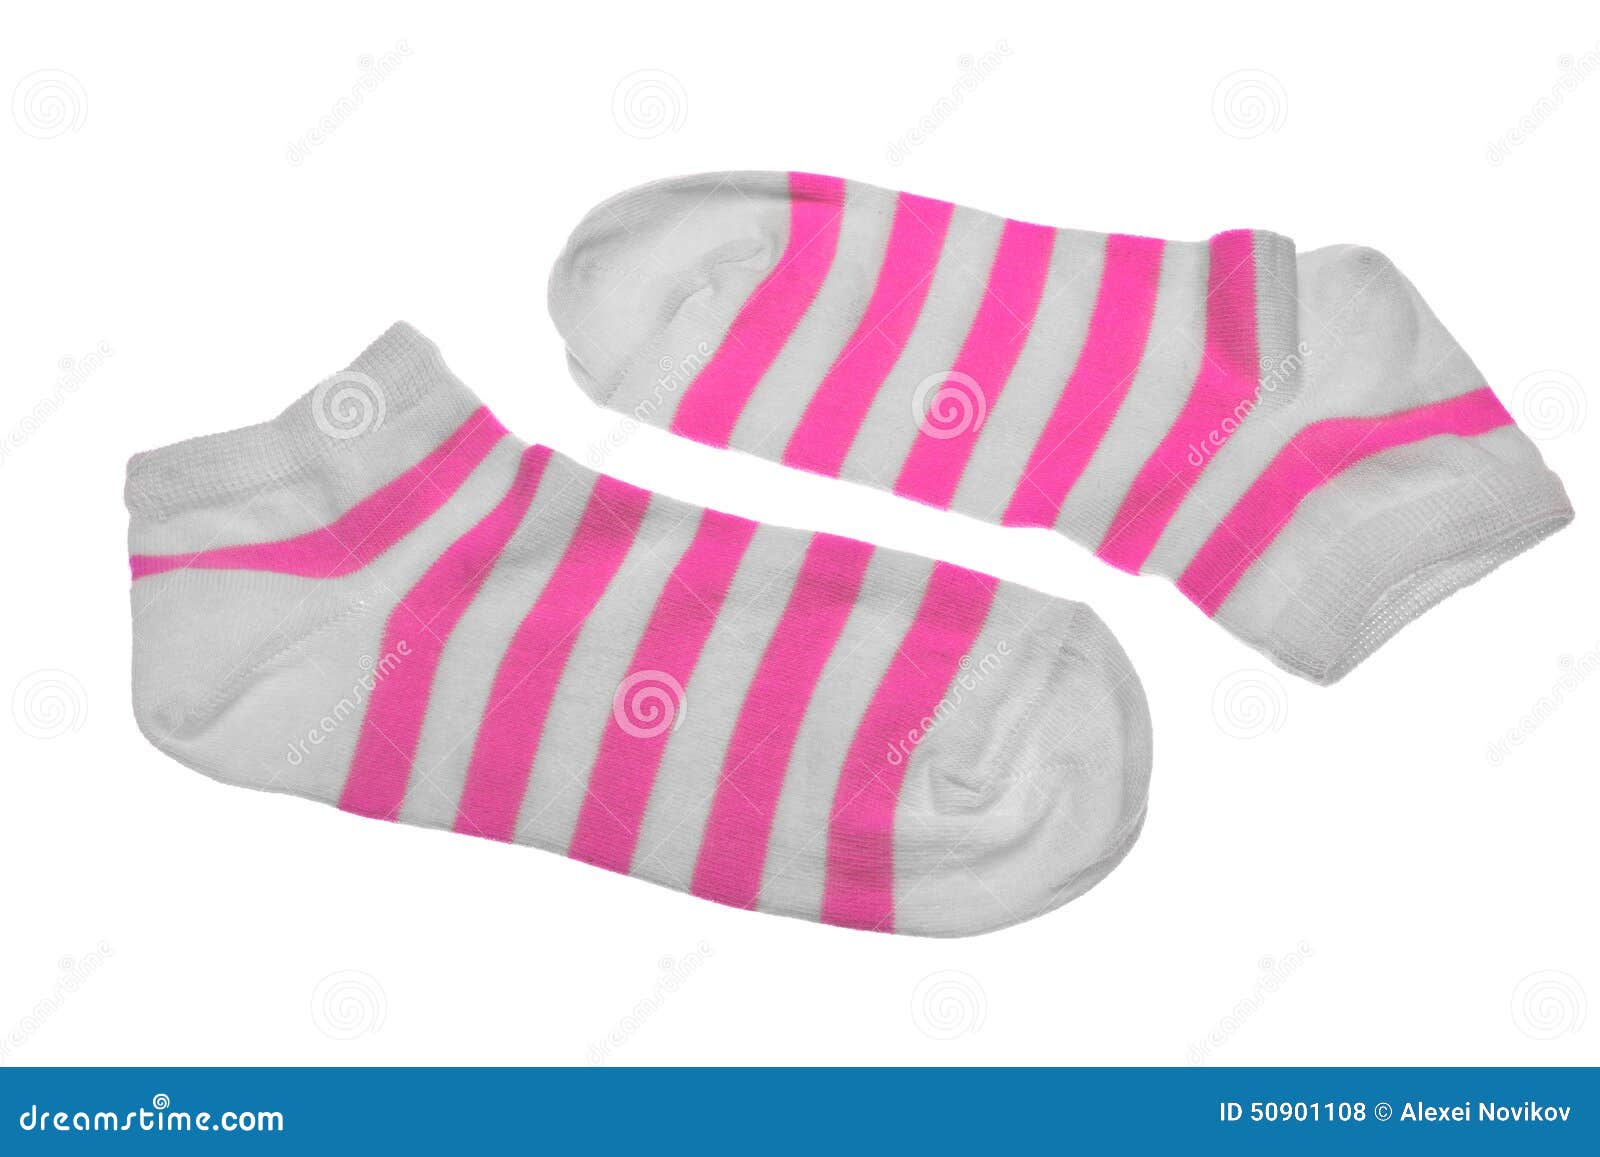 A Pair Of Pink Slippers Stock Image | CartoonDealer.com #34352179